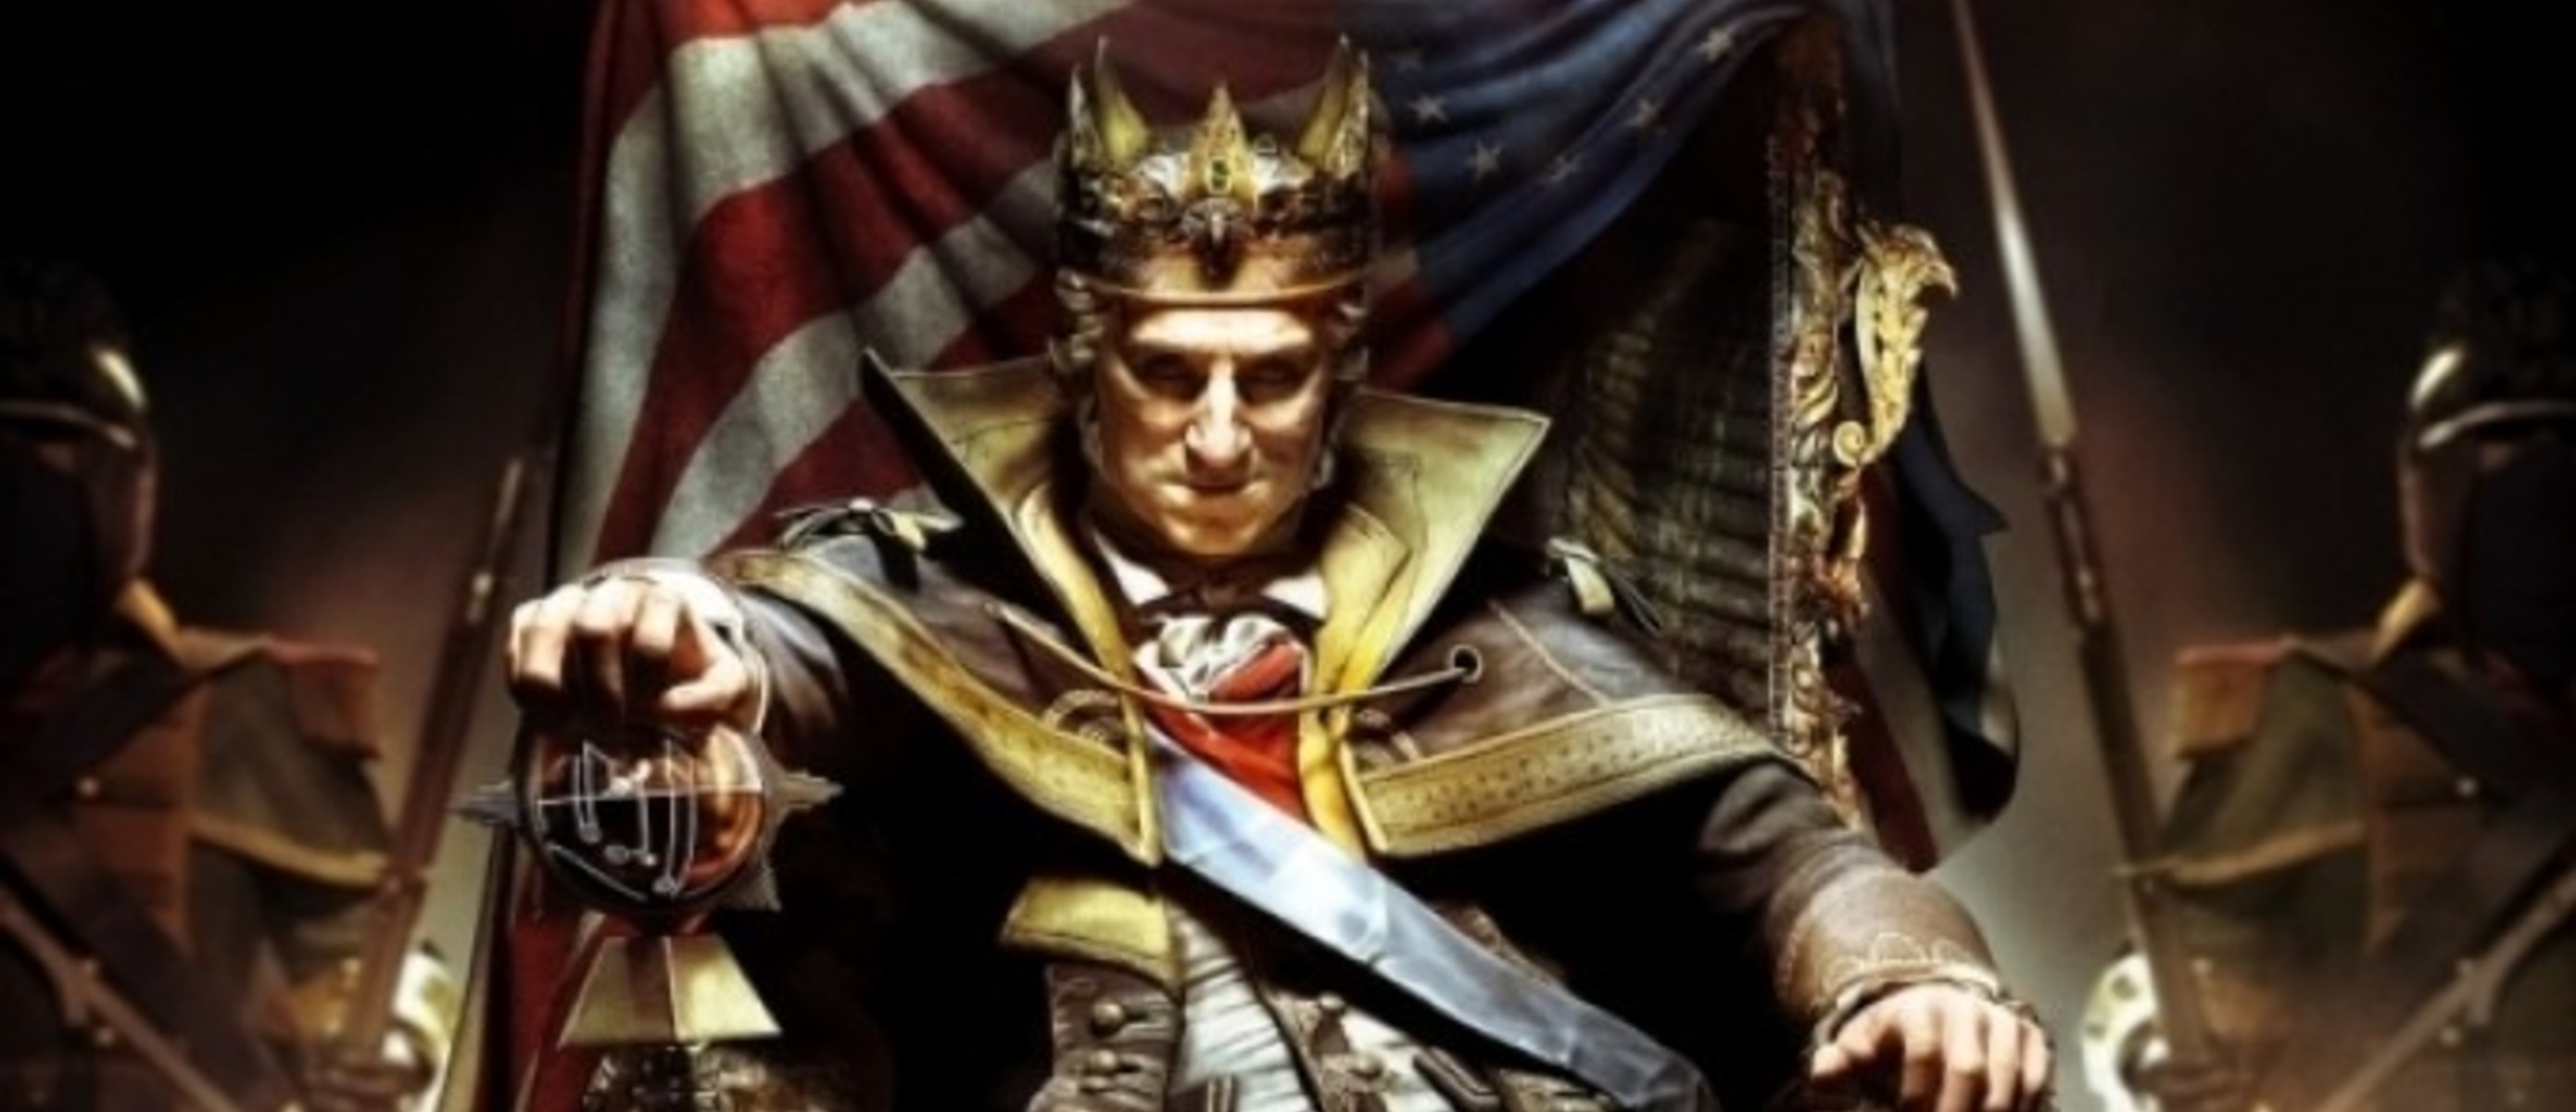 Король на троне. Джордж Вашингтон Assassins Creed. The Tyranny of King Washington DLC. Assassin's Creed 3 the Tyranny of King Washington. Assassin's Creed 3 DLC the Tyranny of King Washington.